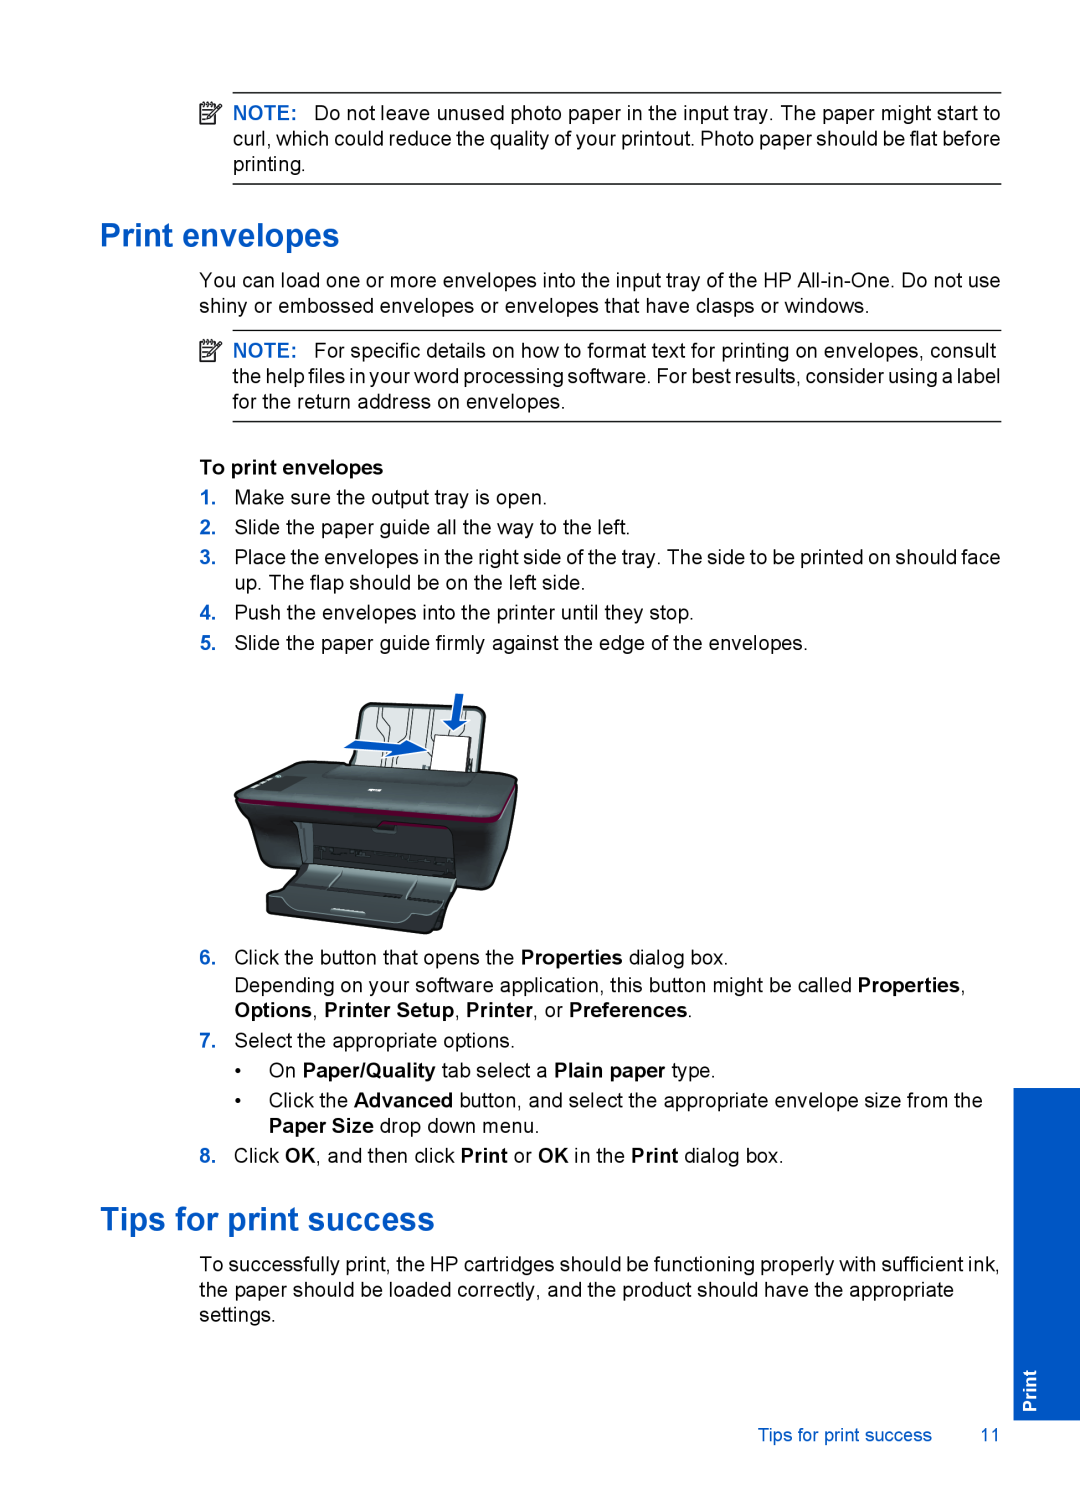 HP 1050 - J410a, 1051, 1056 - J410a, 1055 - J410e manual Print envelopes, Tips for print success, To print envelopes 